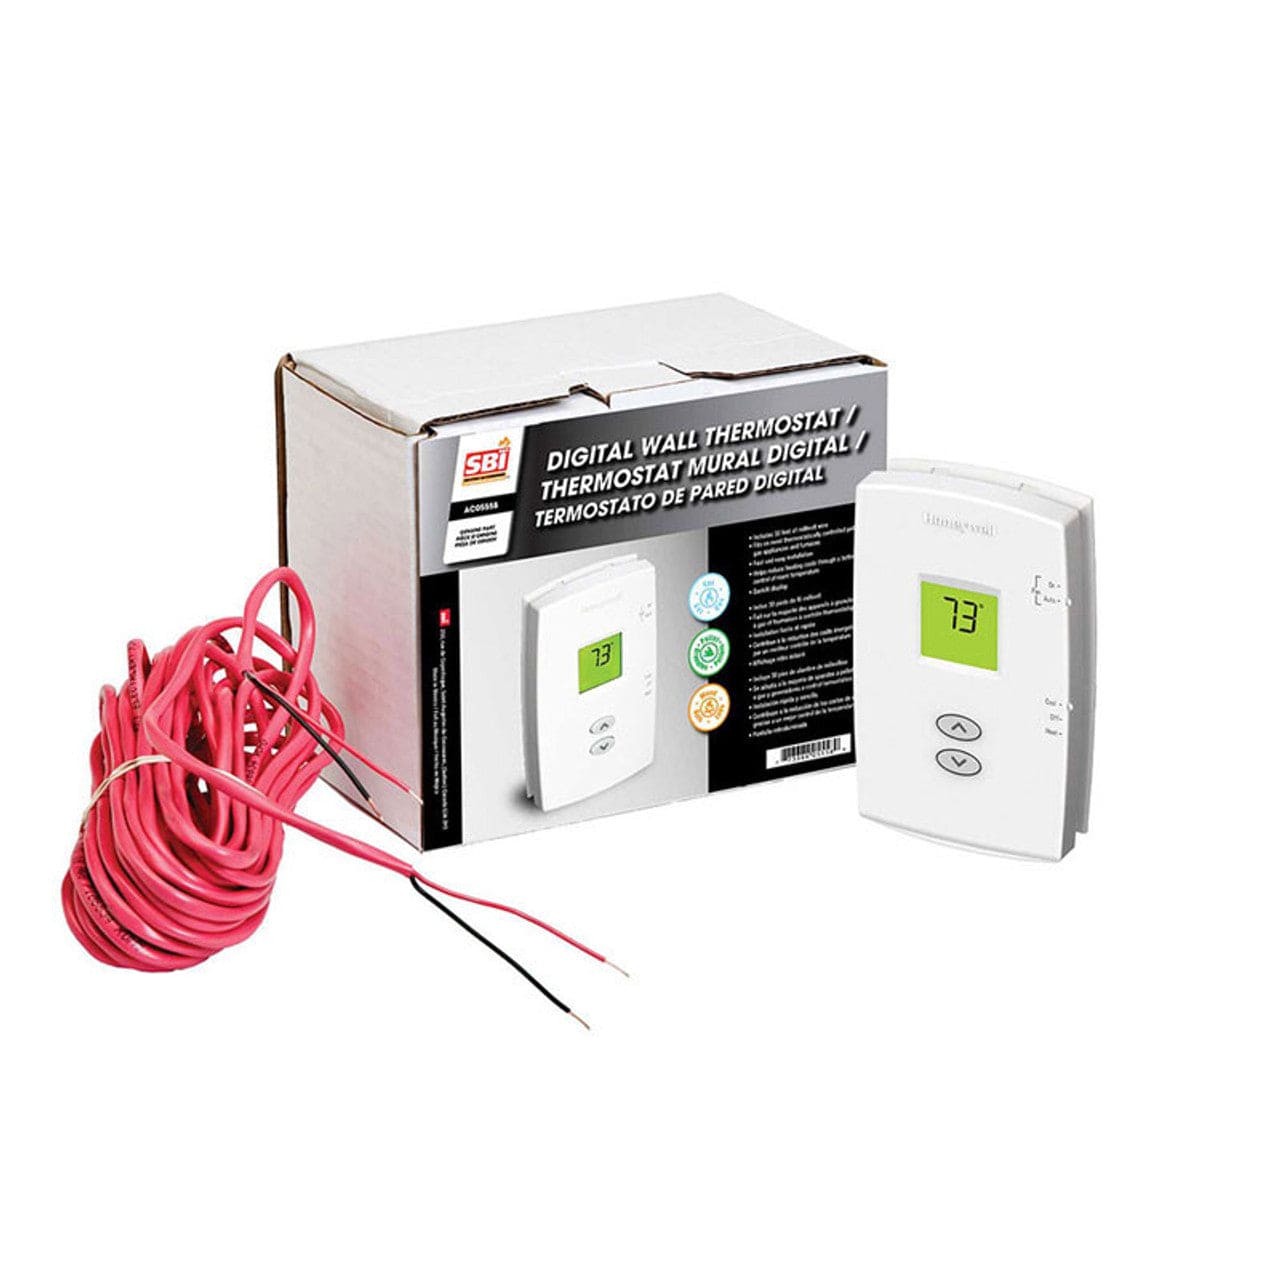 Ventis Digital Wall Thermostat - AC05558 - Chimney Cricket